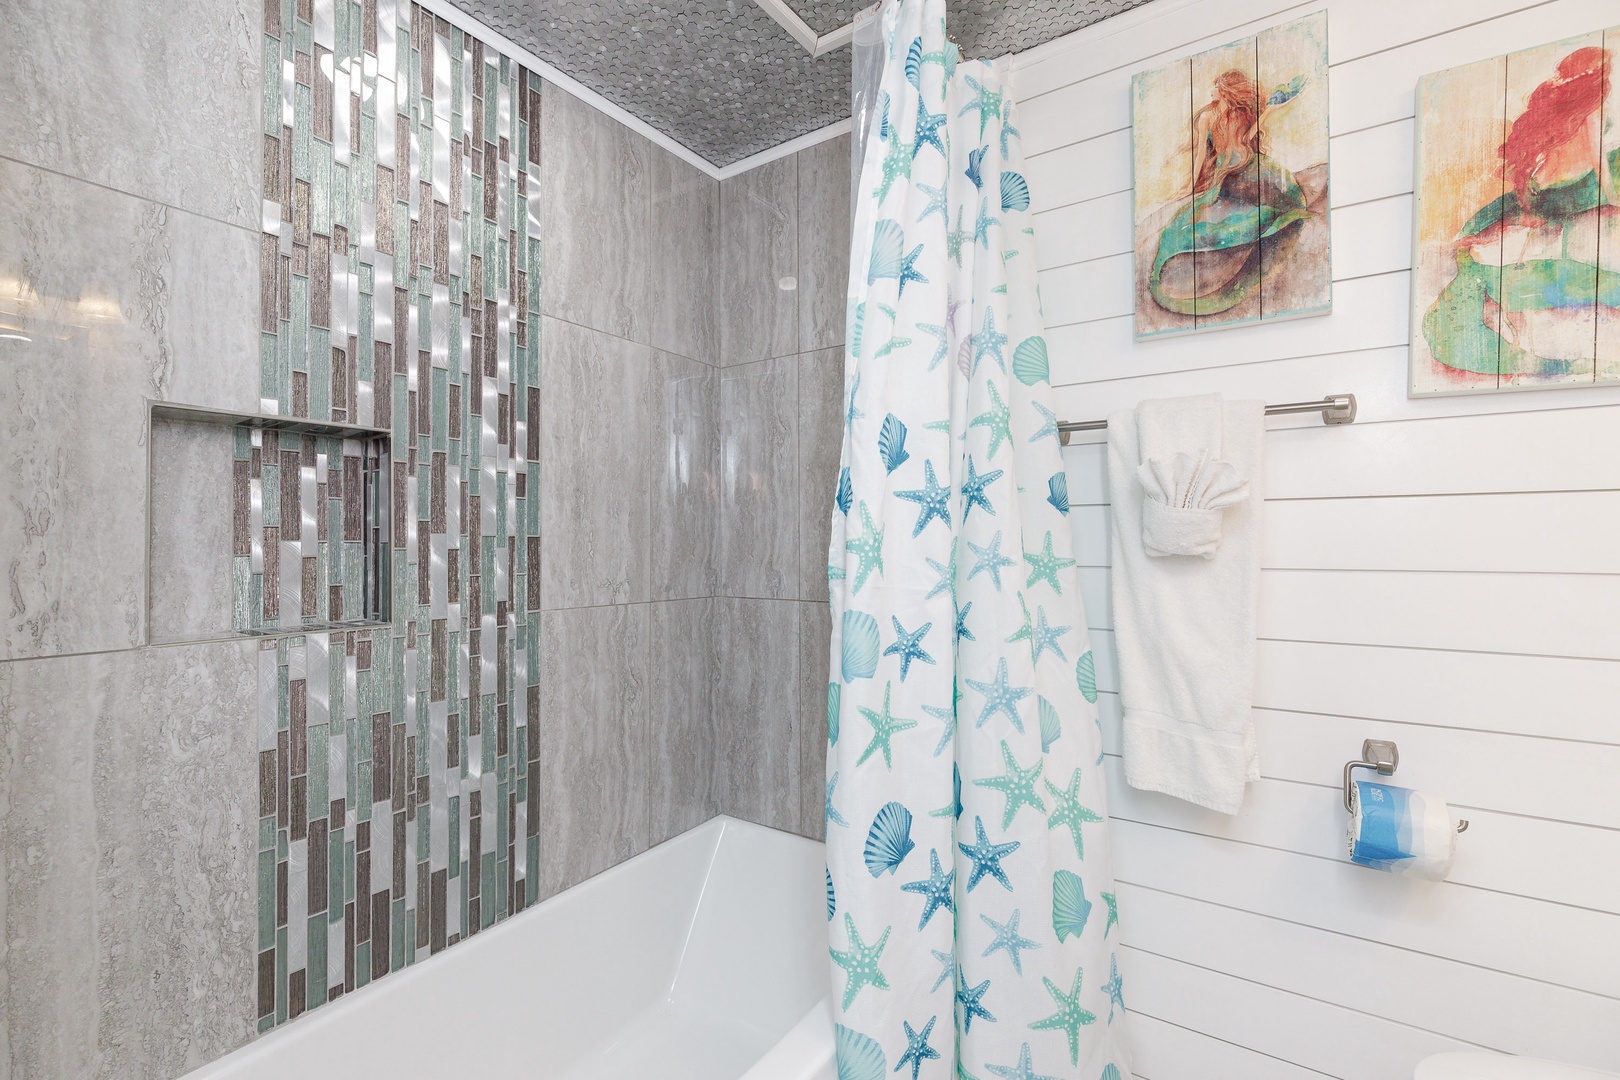 This en suite bathroom includes a single vanity & shower/tub combo